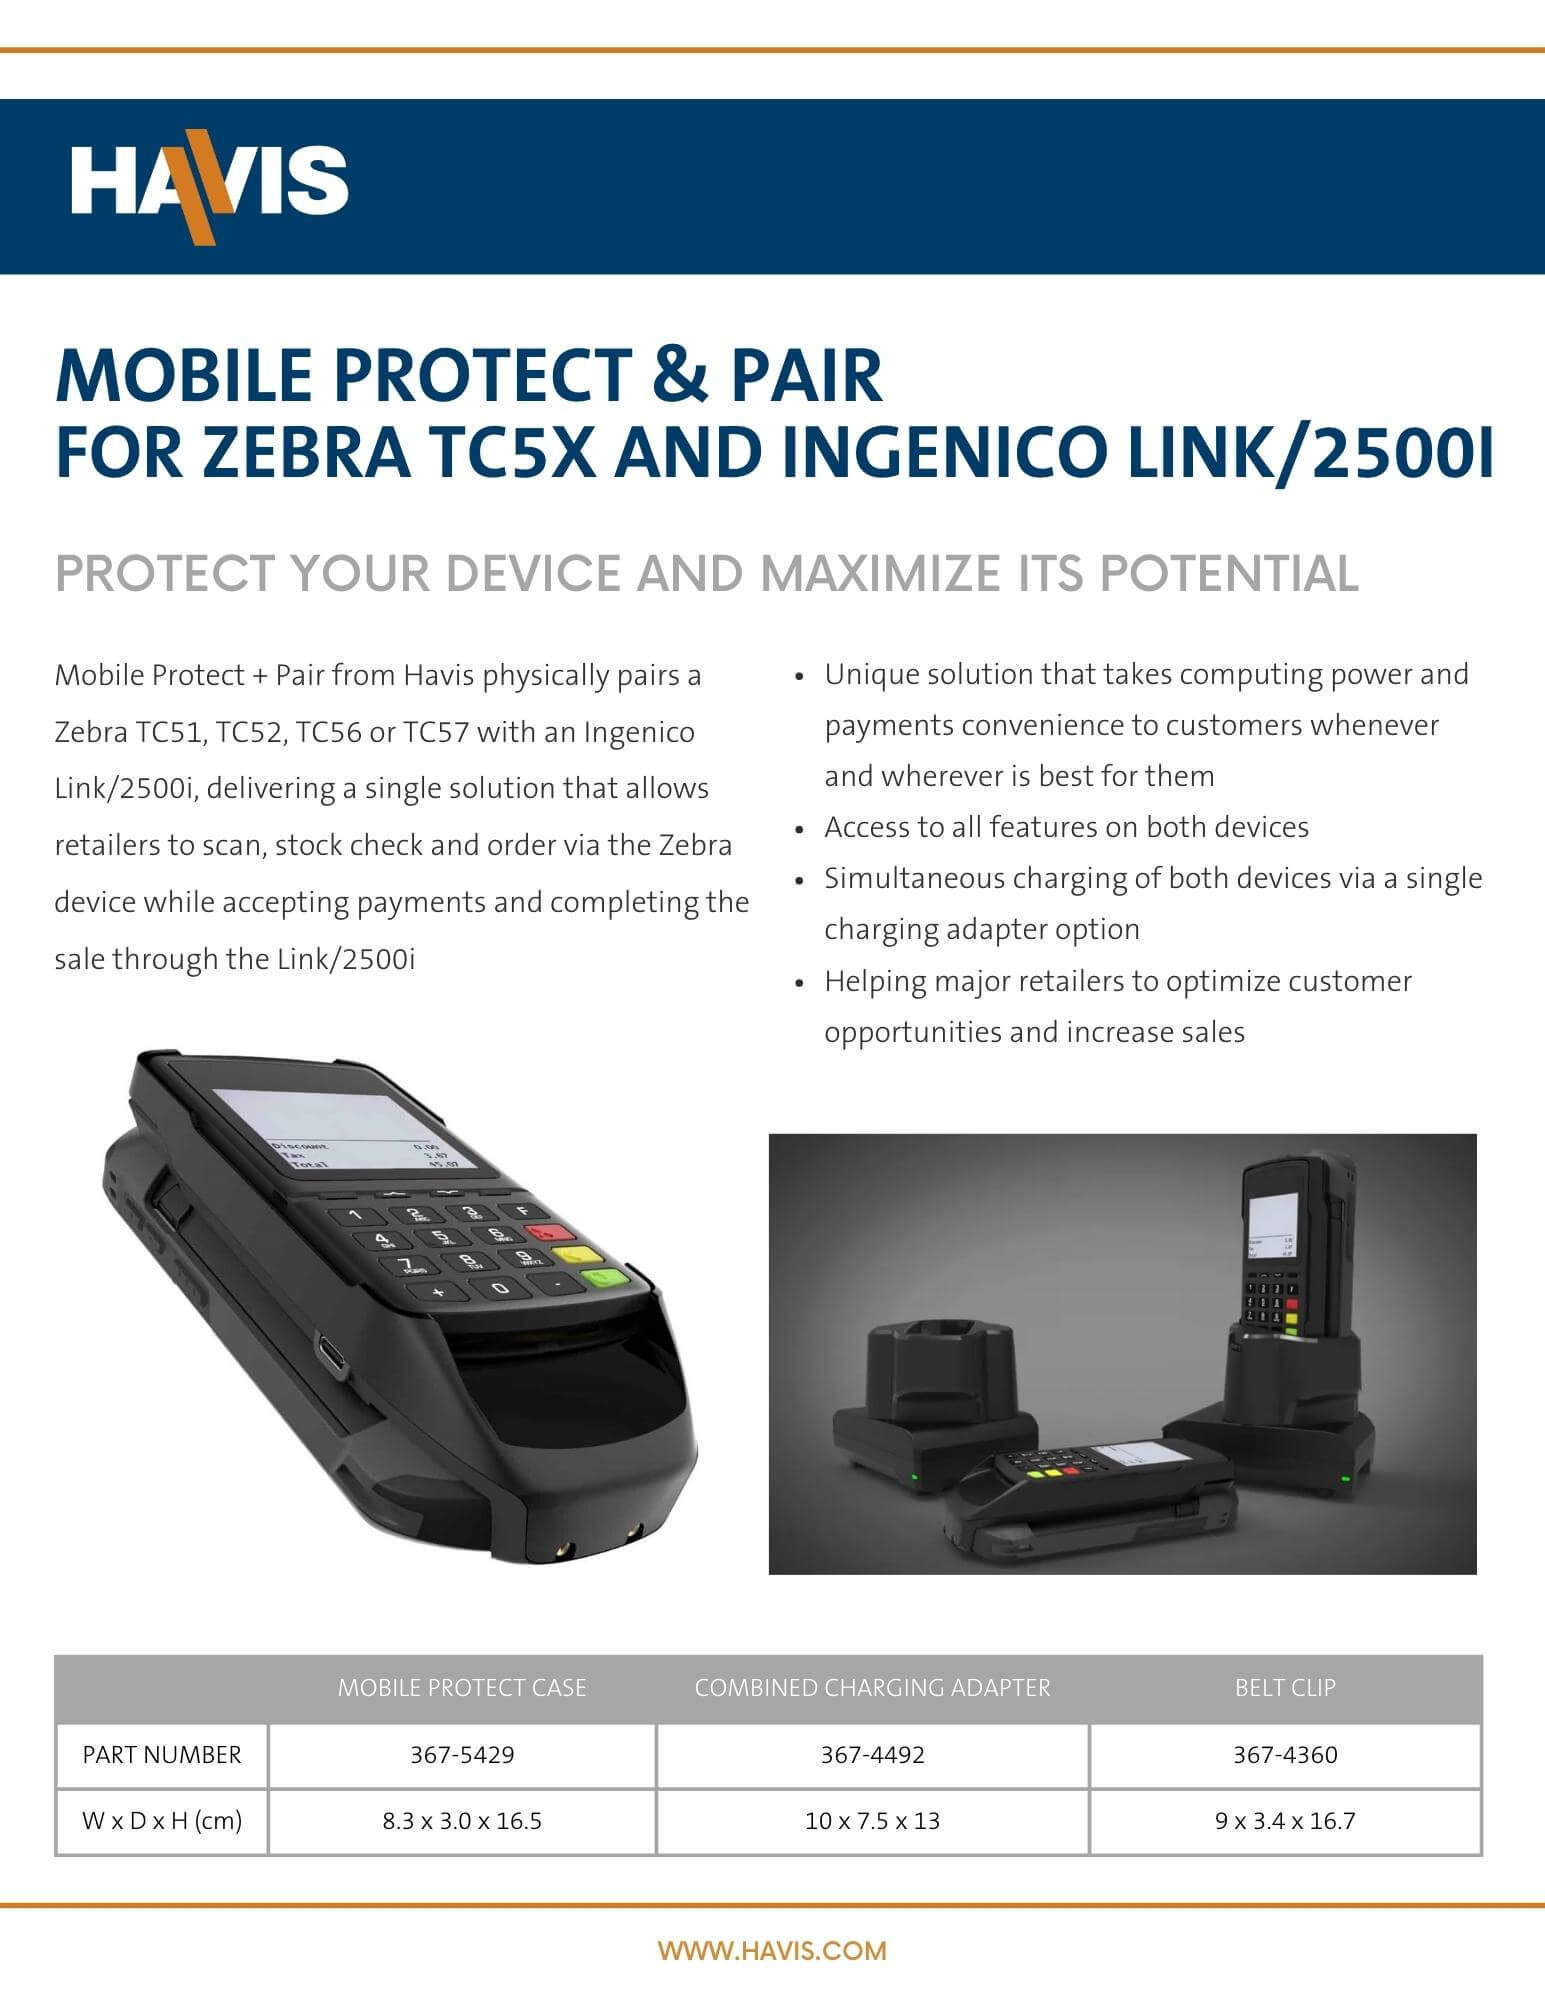 Mobile Protect & Pair for Zebra TC5X & Ingenico Link2500i Datasheet